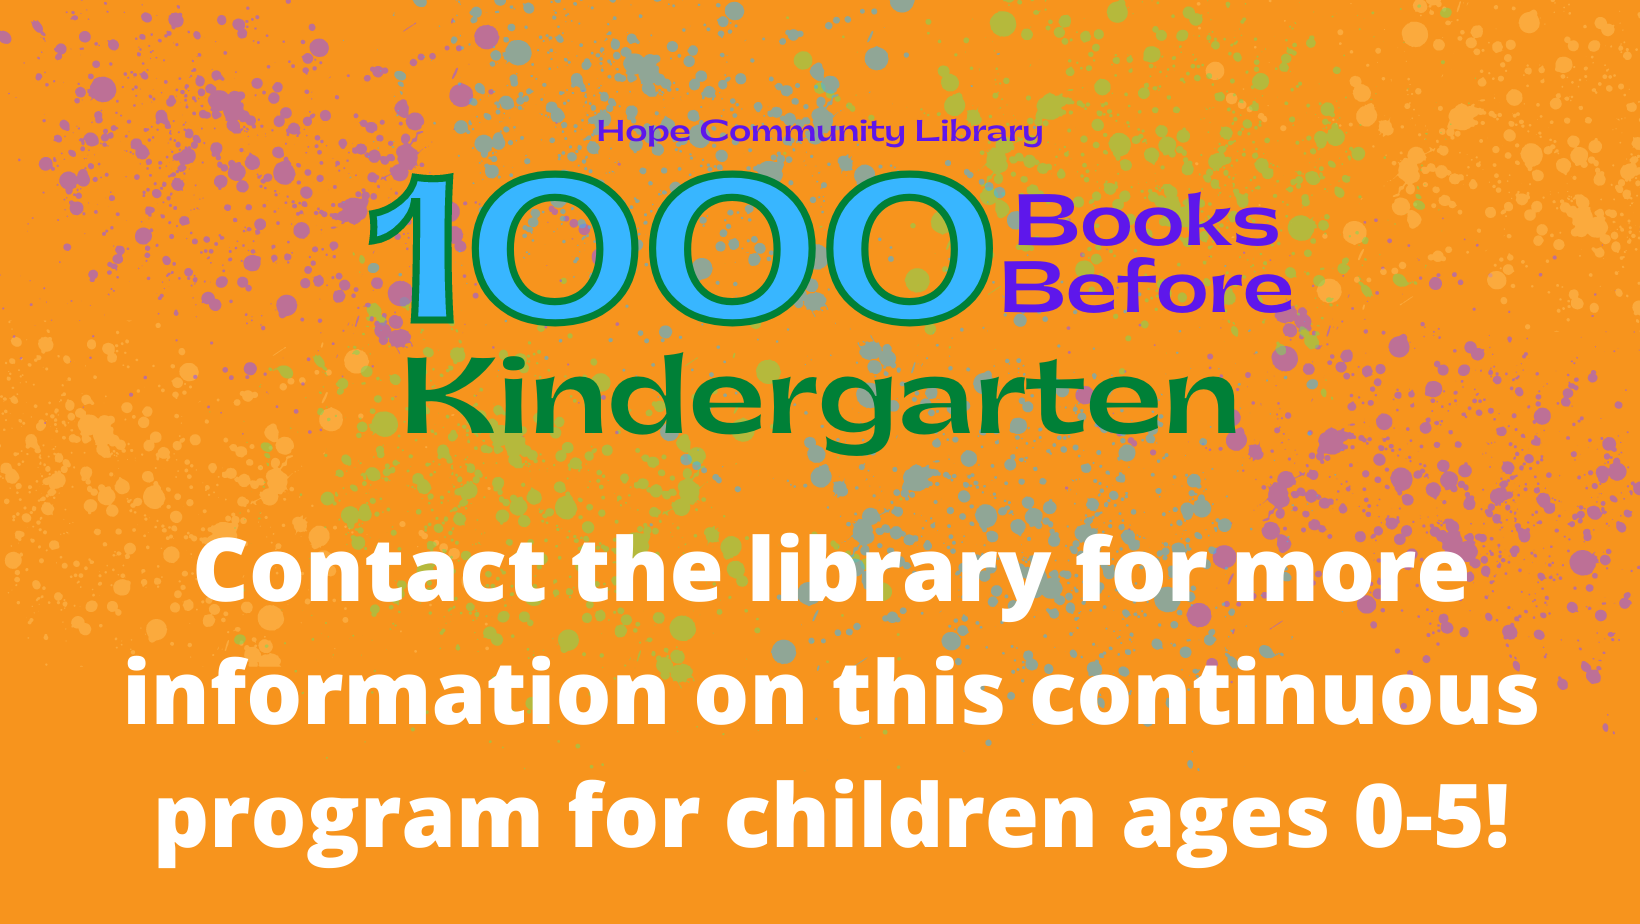 1000 Books Before Kindergarten Program to get kids to read